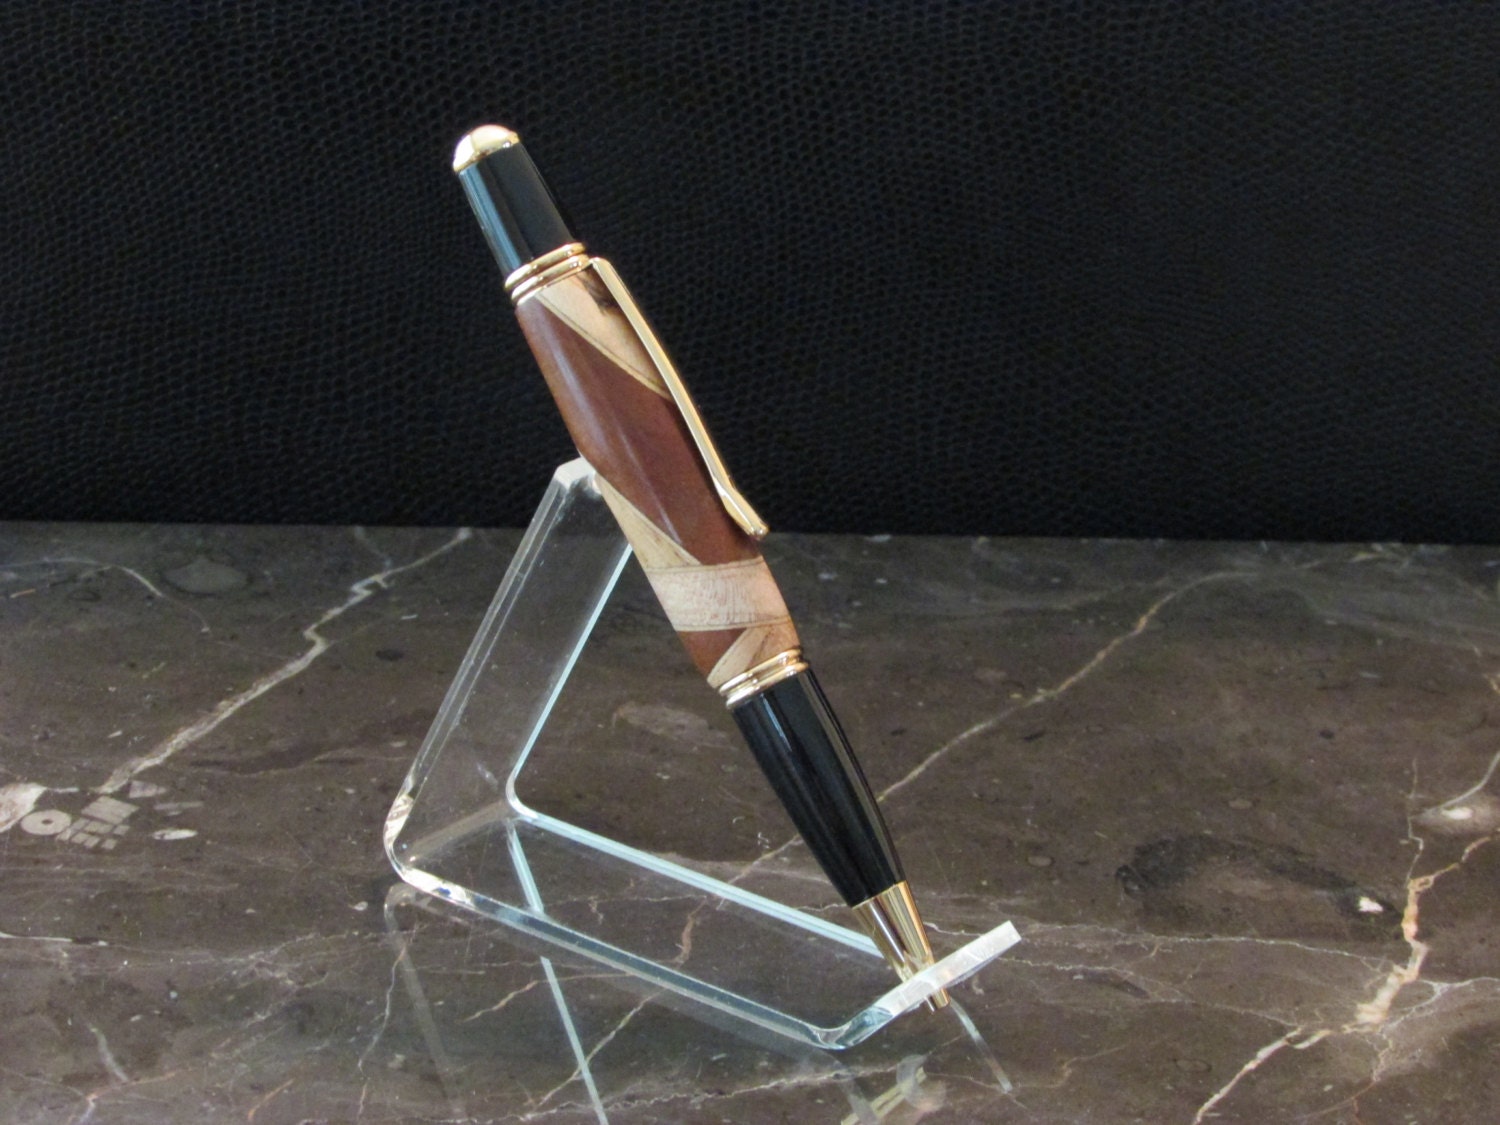 diy handmade gatsby pen kit wood